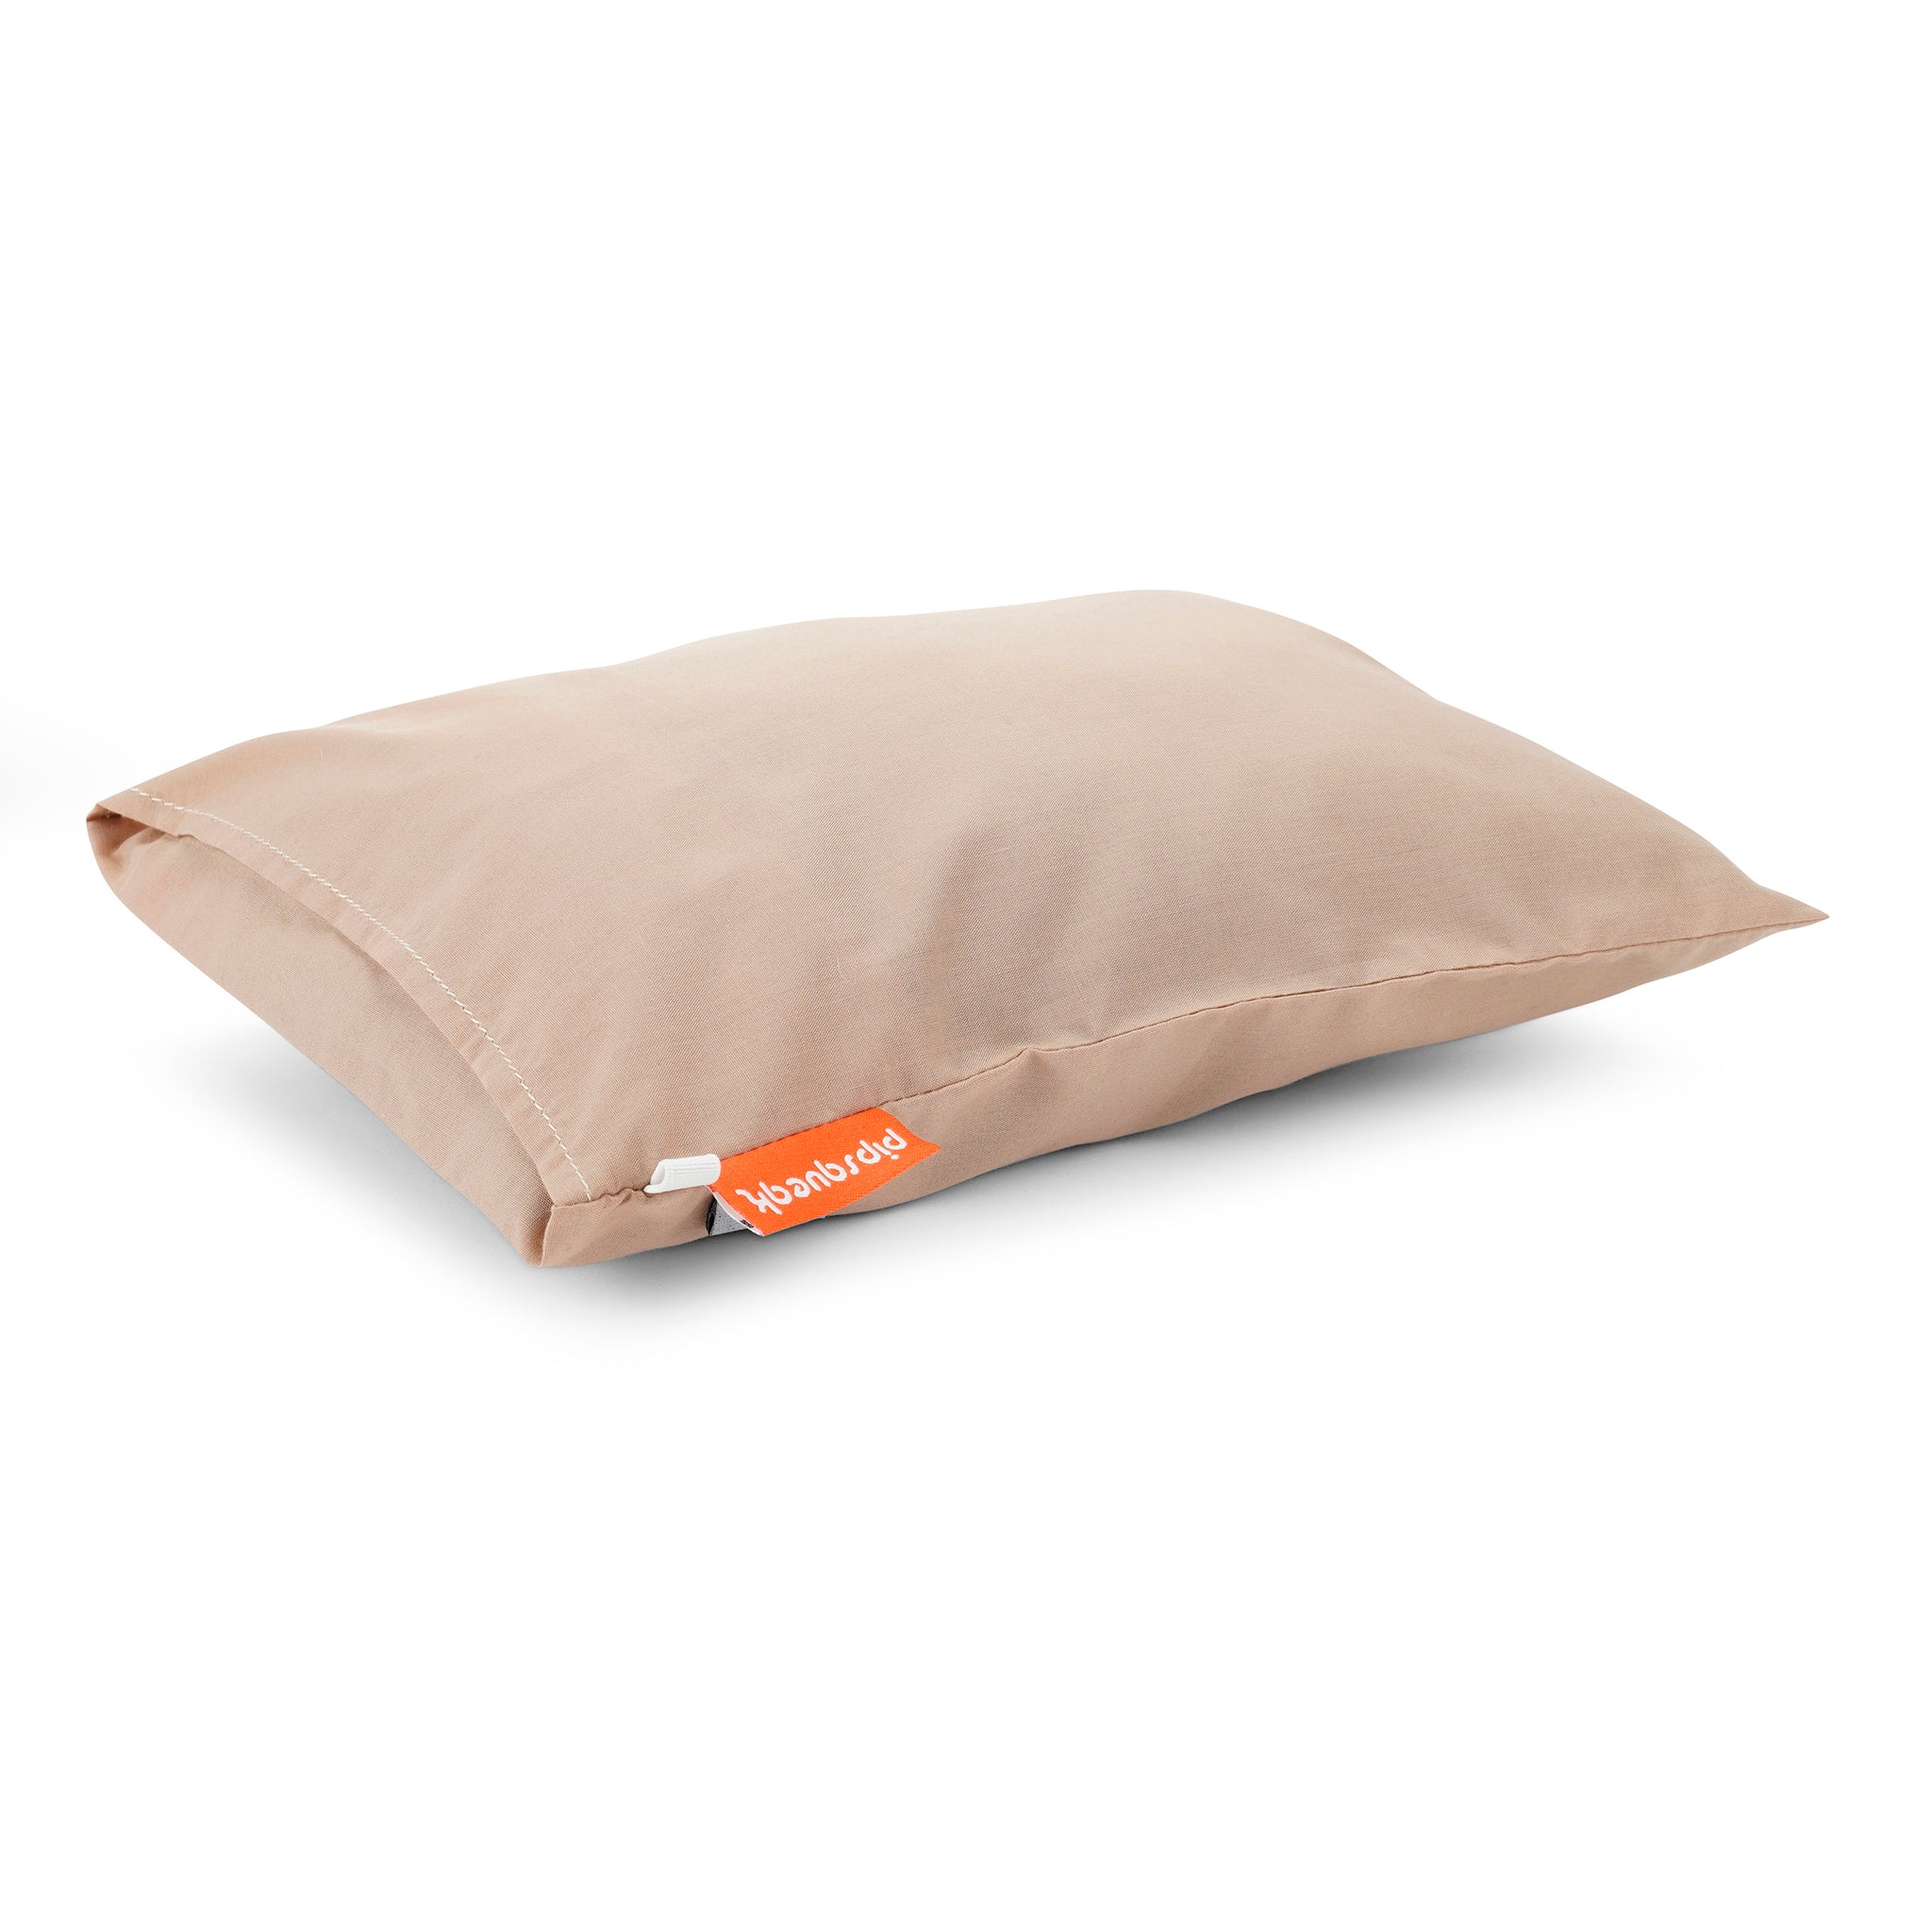 Pipsqueak® Pillow and Pillowcase